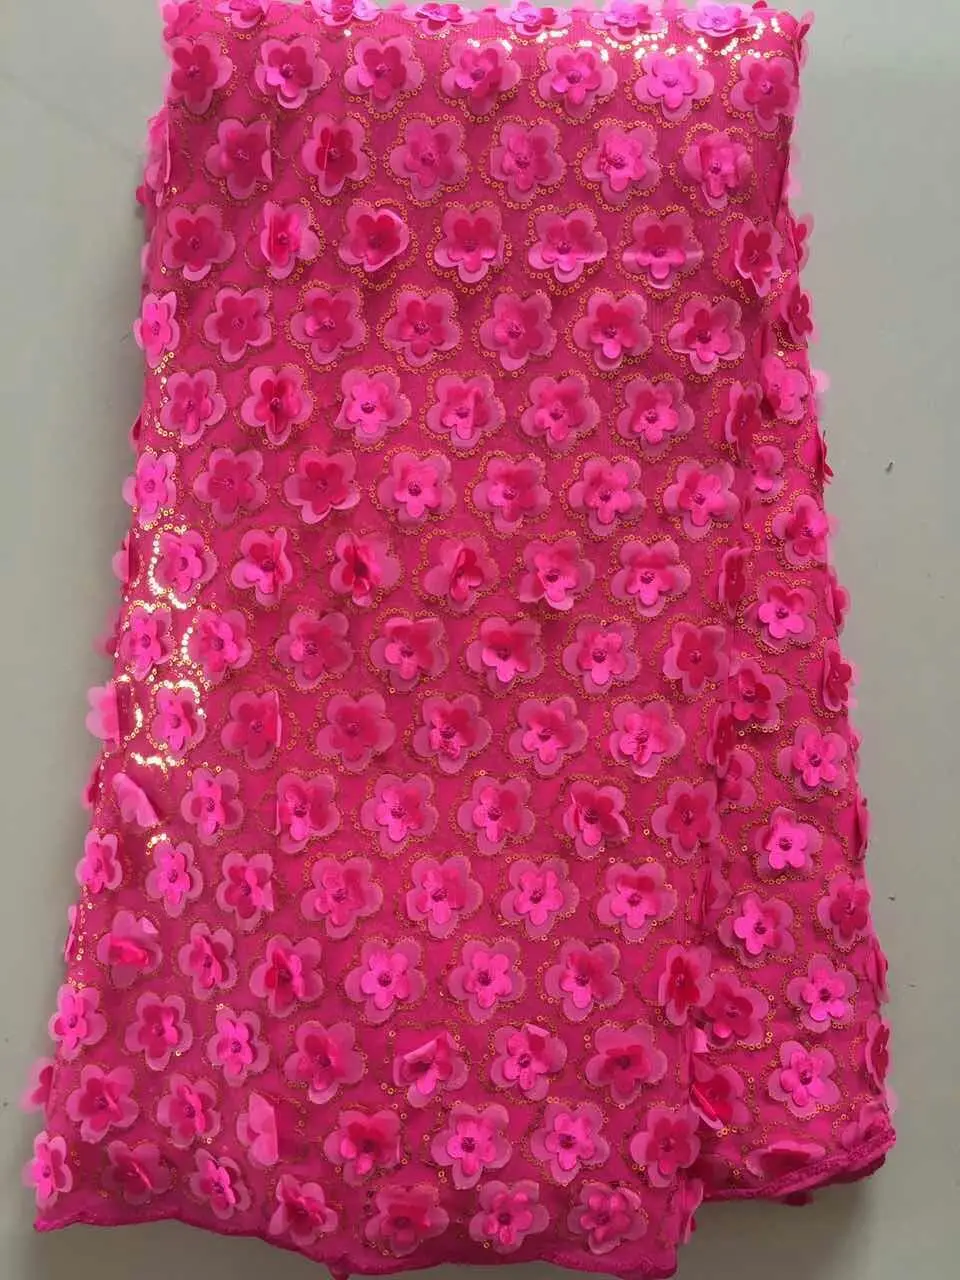 Aliexpress.com : Buy Blush Pink Bridal Lace Fabric, High 